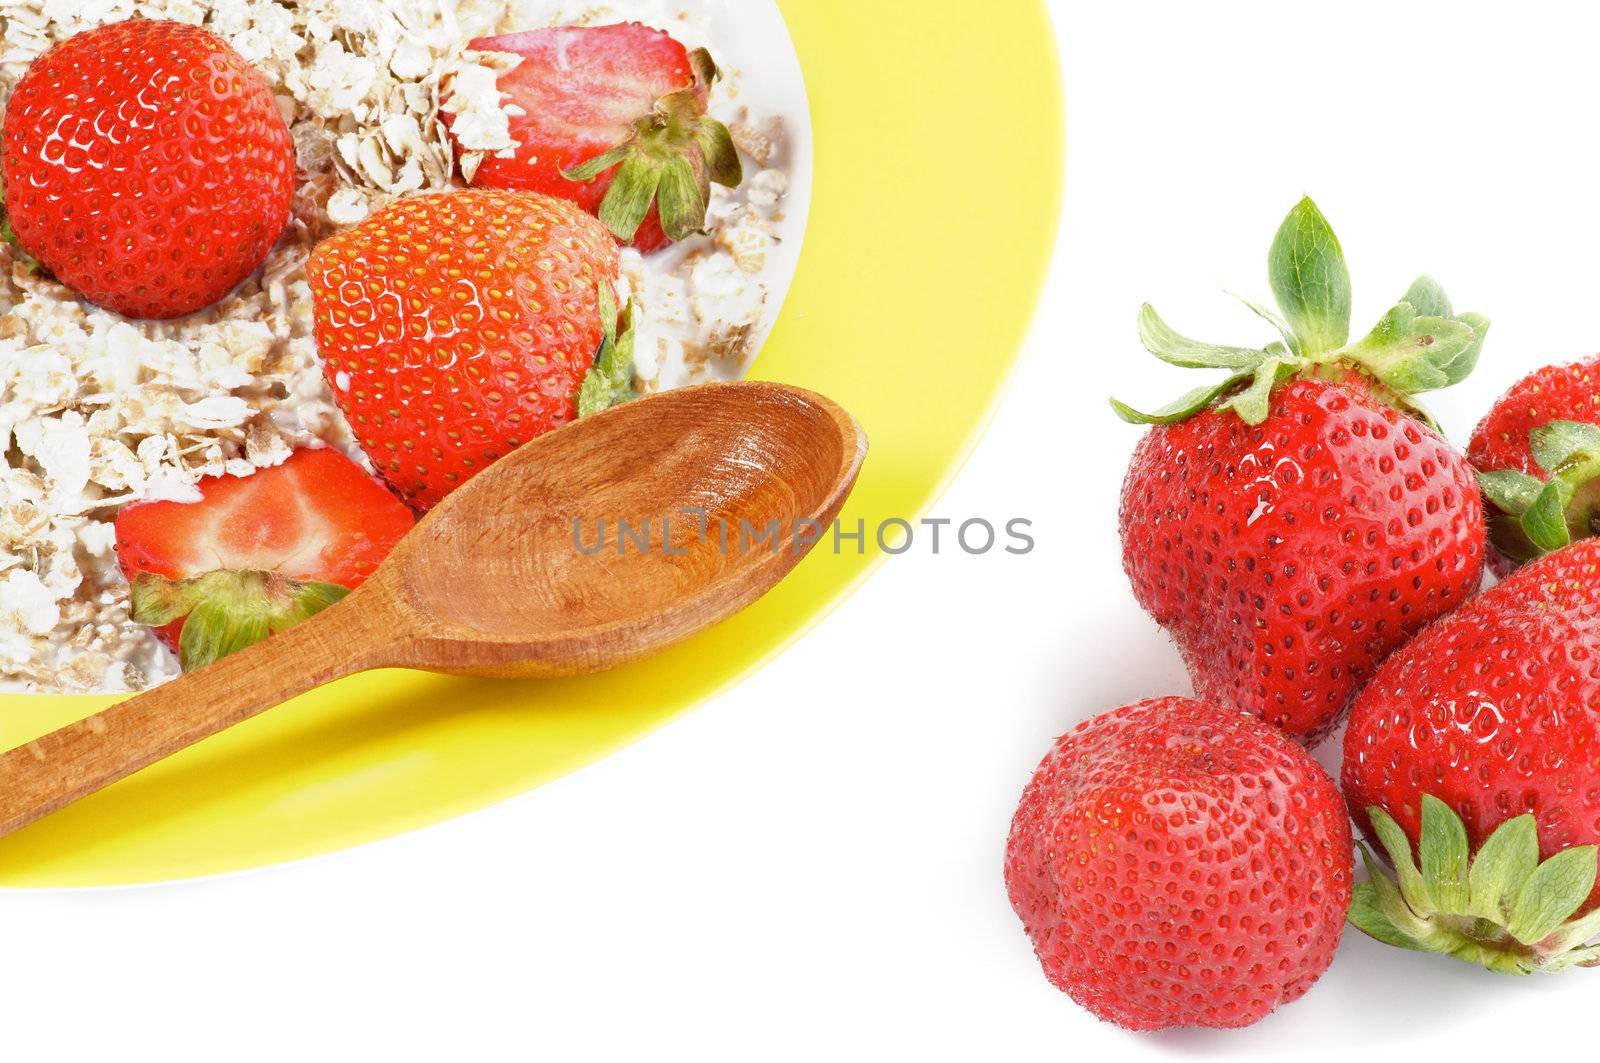 Healthy Breakfast with Strawberries by zhekos